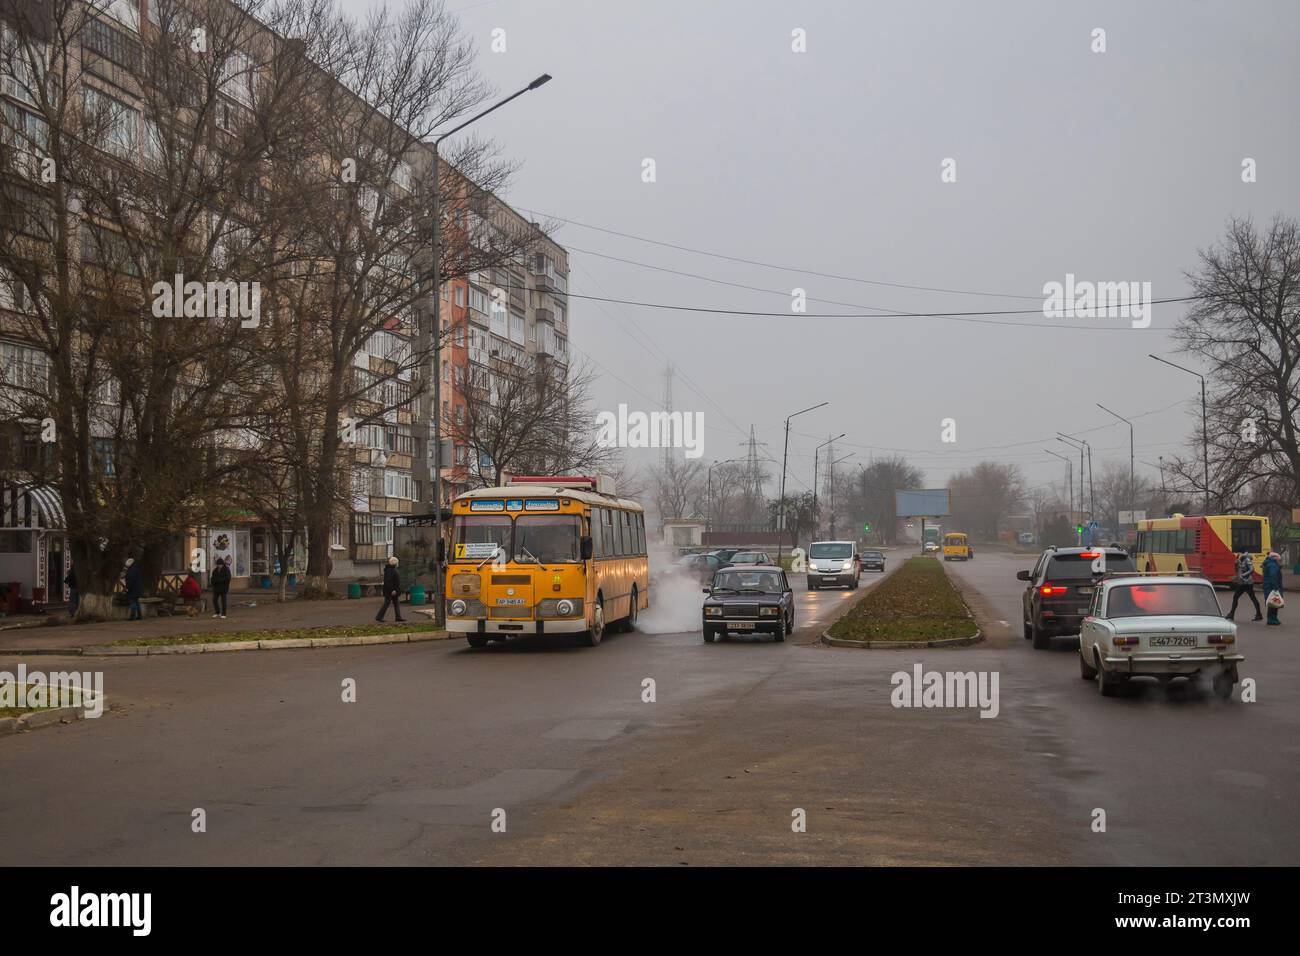 29.12.2020. Ukraine, Oleksandriya. Liaz-677 on urban route. Stock Photo